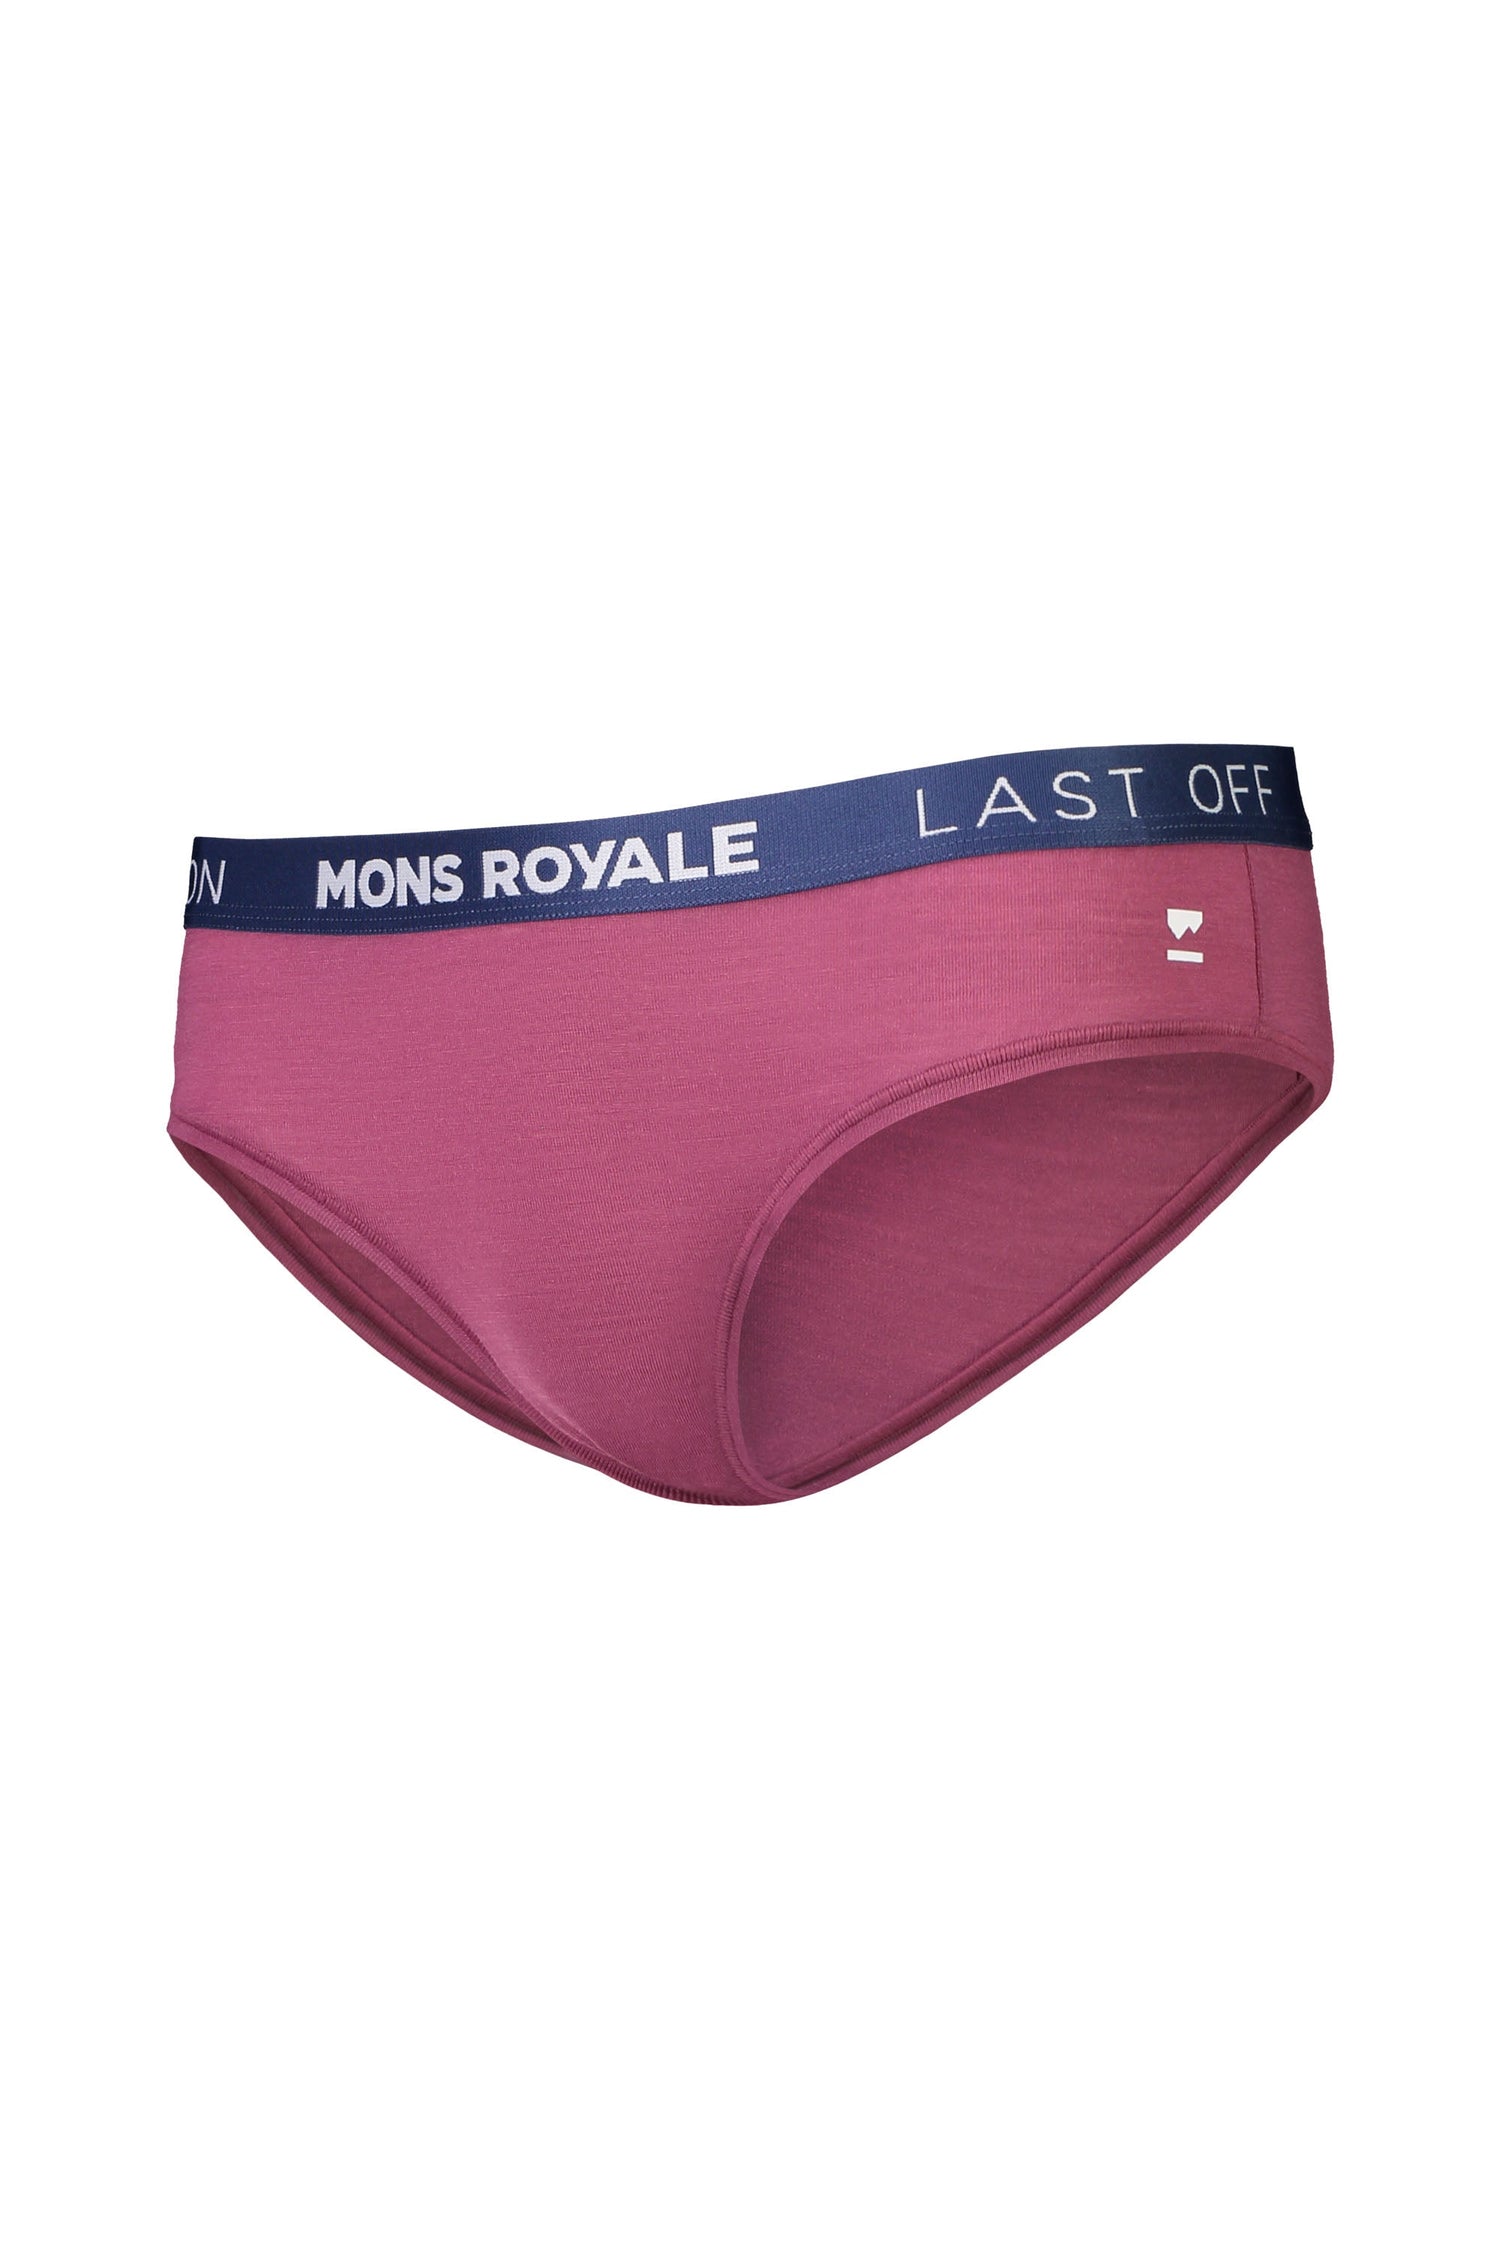 Mons Royale - Folo Brief - Merino wool - Weekendbee - sustainable sportswear